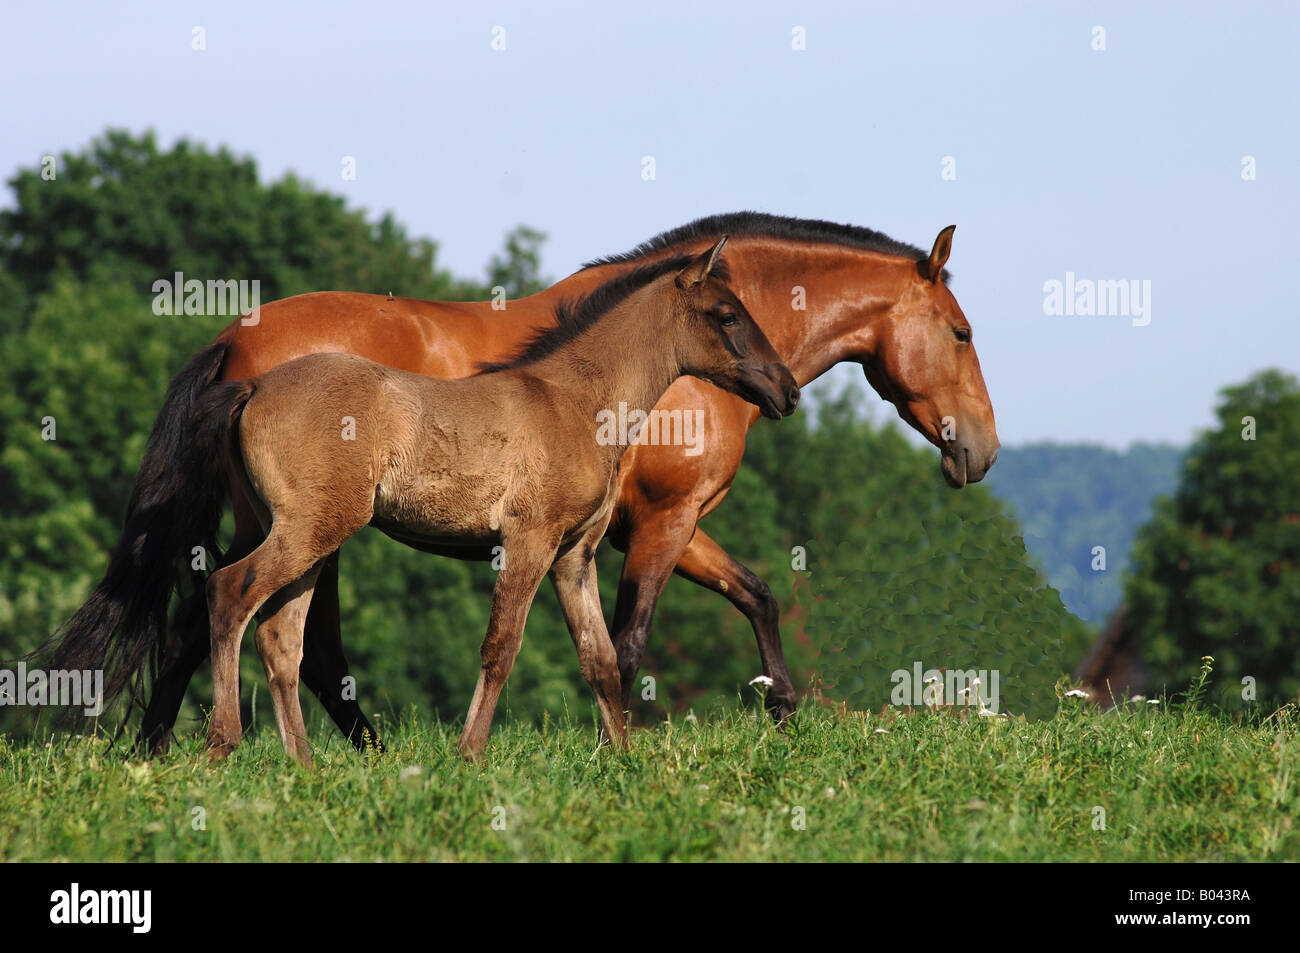 pura raza espanola pre andalusier Andalusian Horse Spanisches Pferd Spain Horses Stock Photo